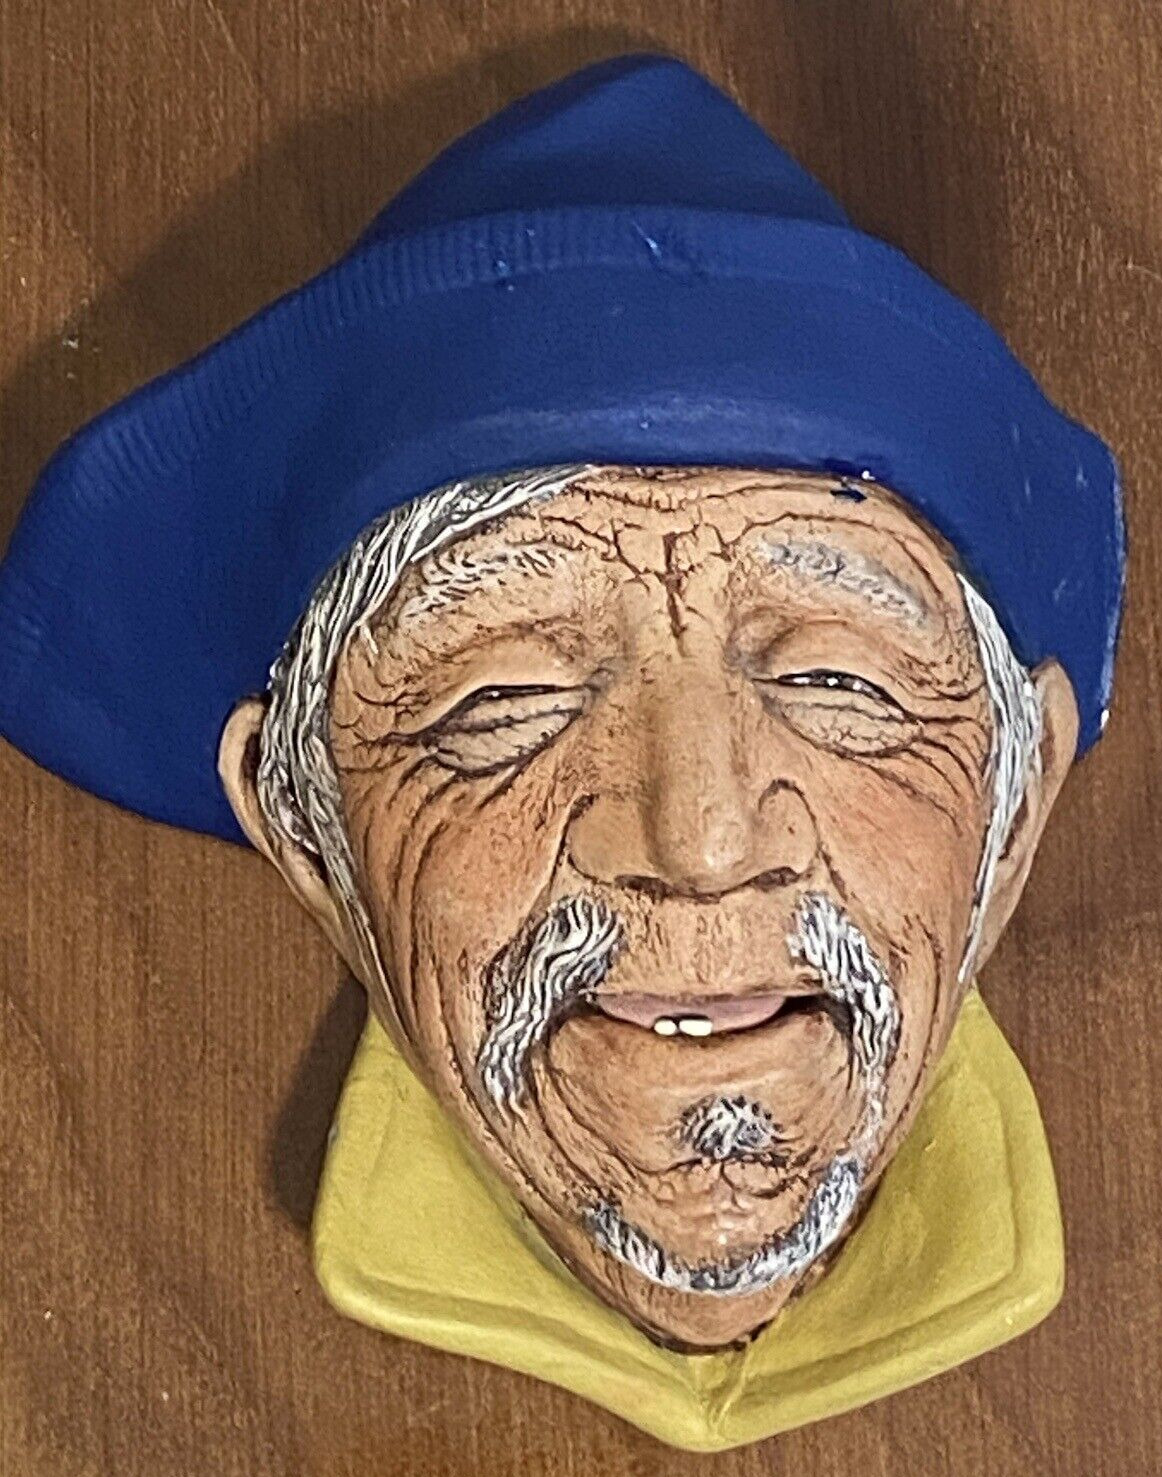 Vintage Hand Crafted Ceramic Chalkware Sardinian Man Head 3D Wall Sculpture